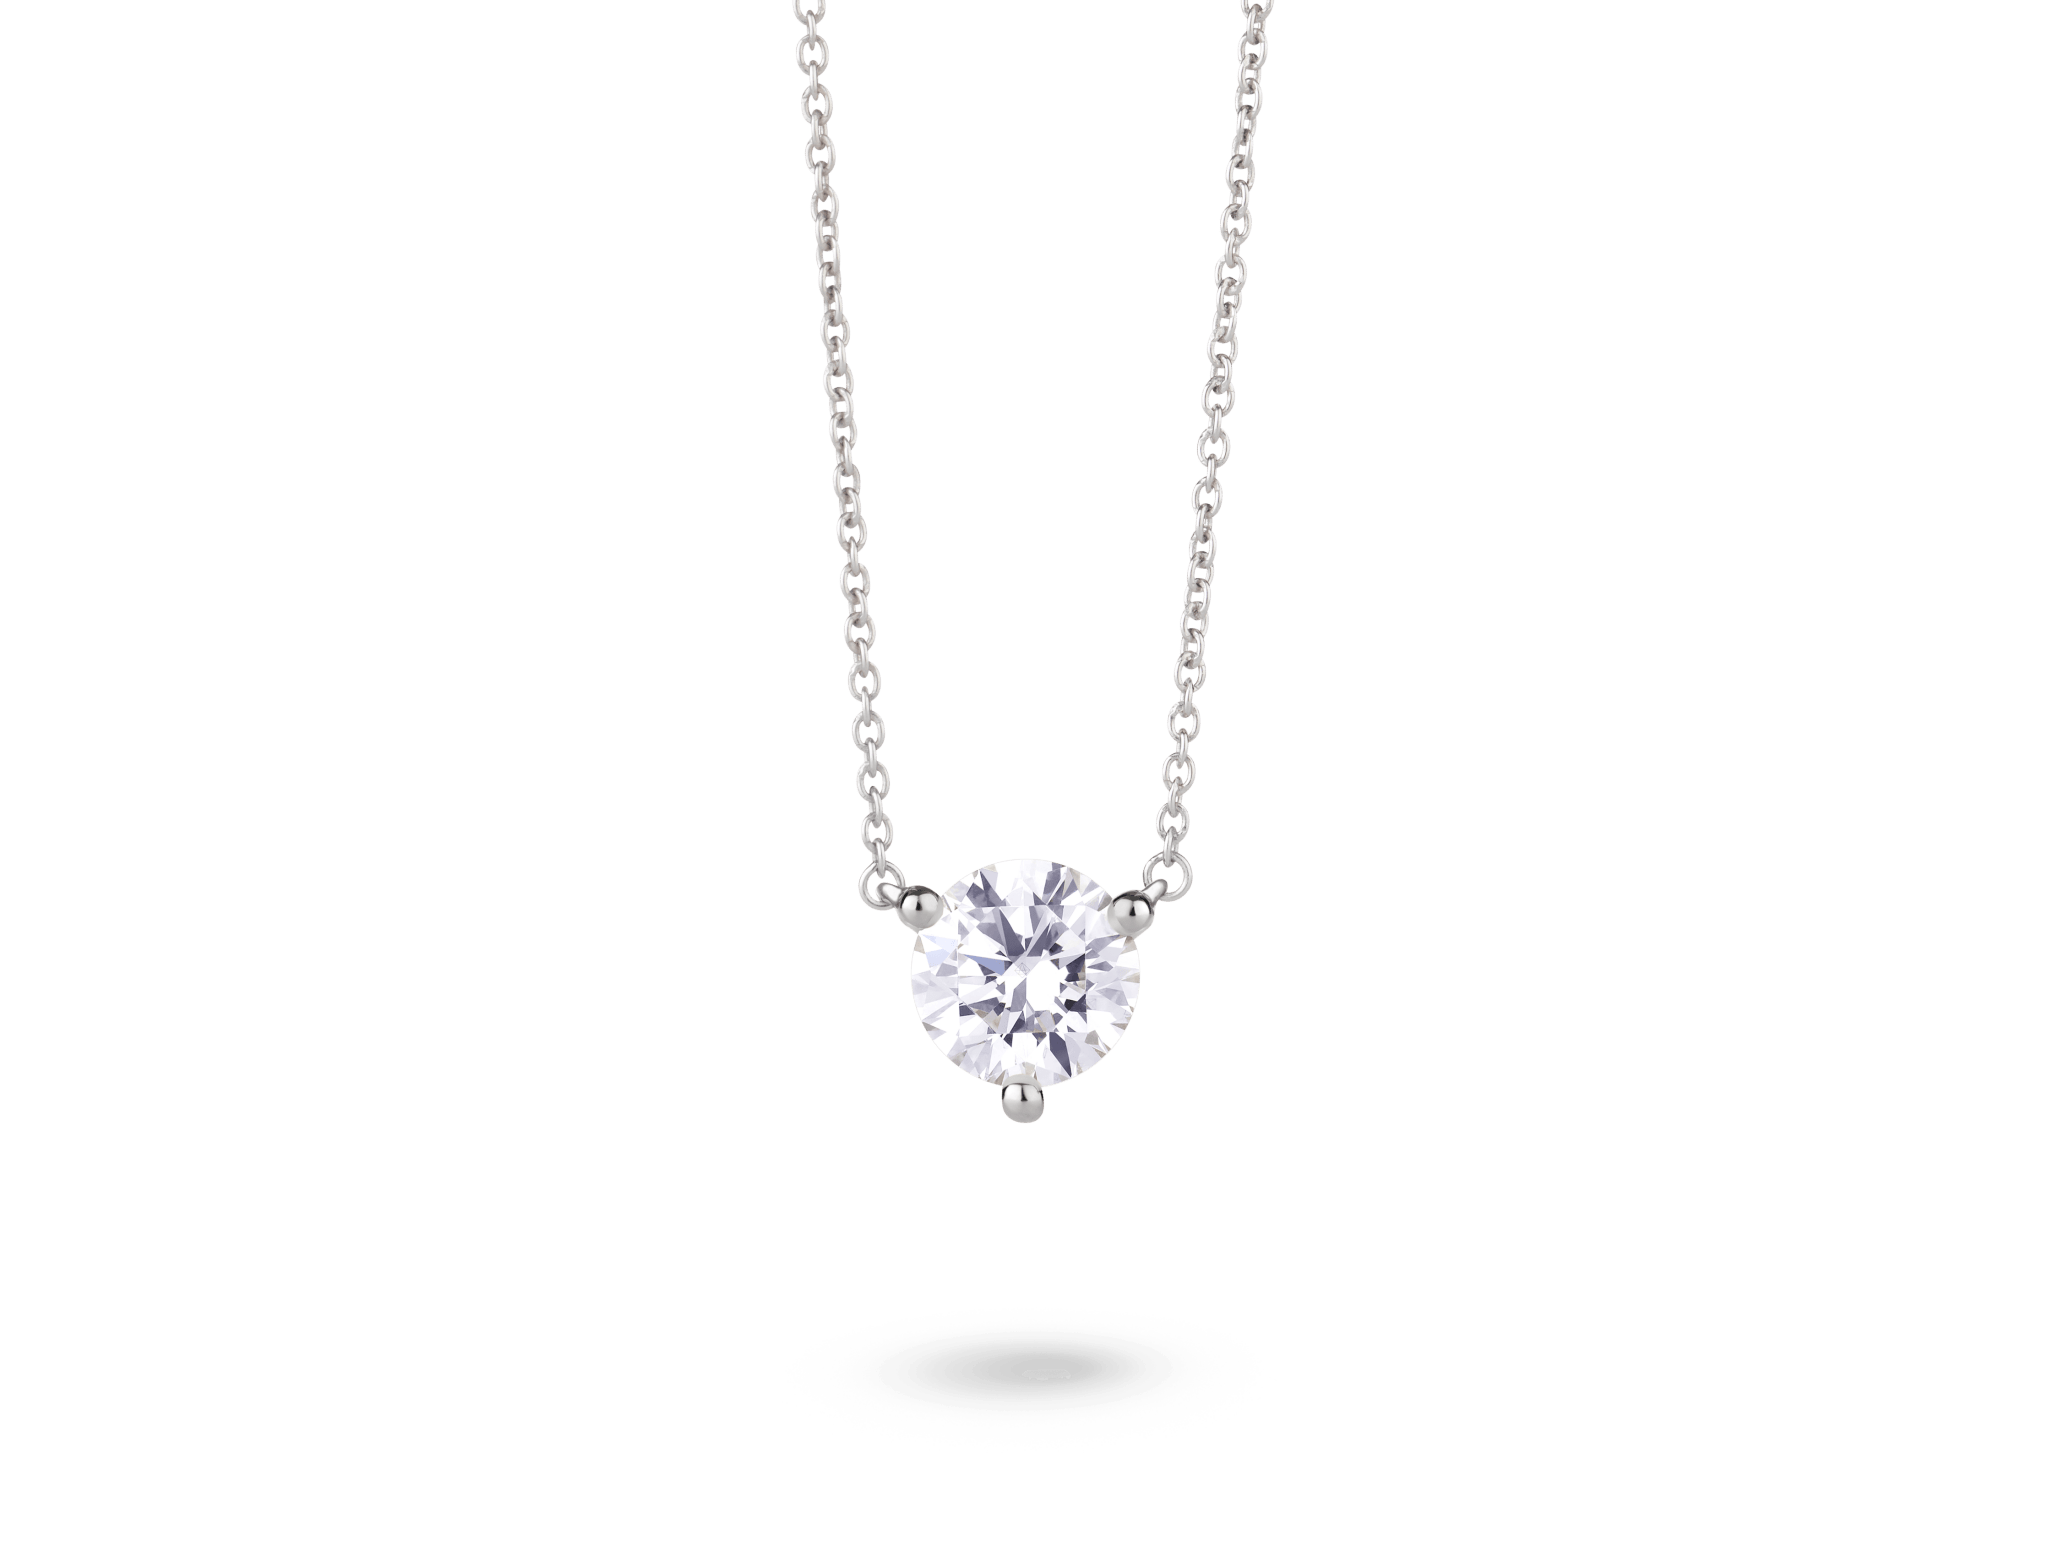 Lab-Grown Diamond 1ct. Round Brilliant Solitaire 14k Gold Pendant | White - #Lightbox Jewelry#